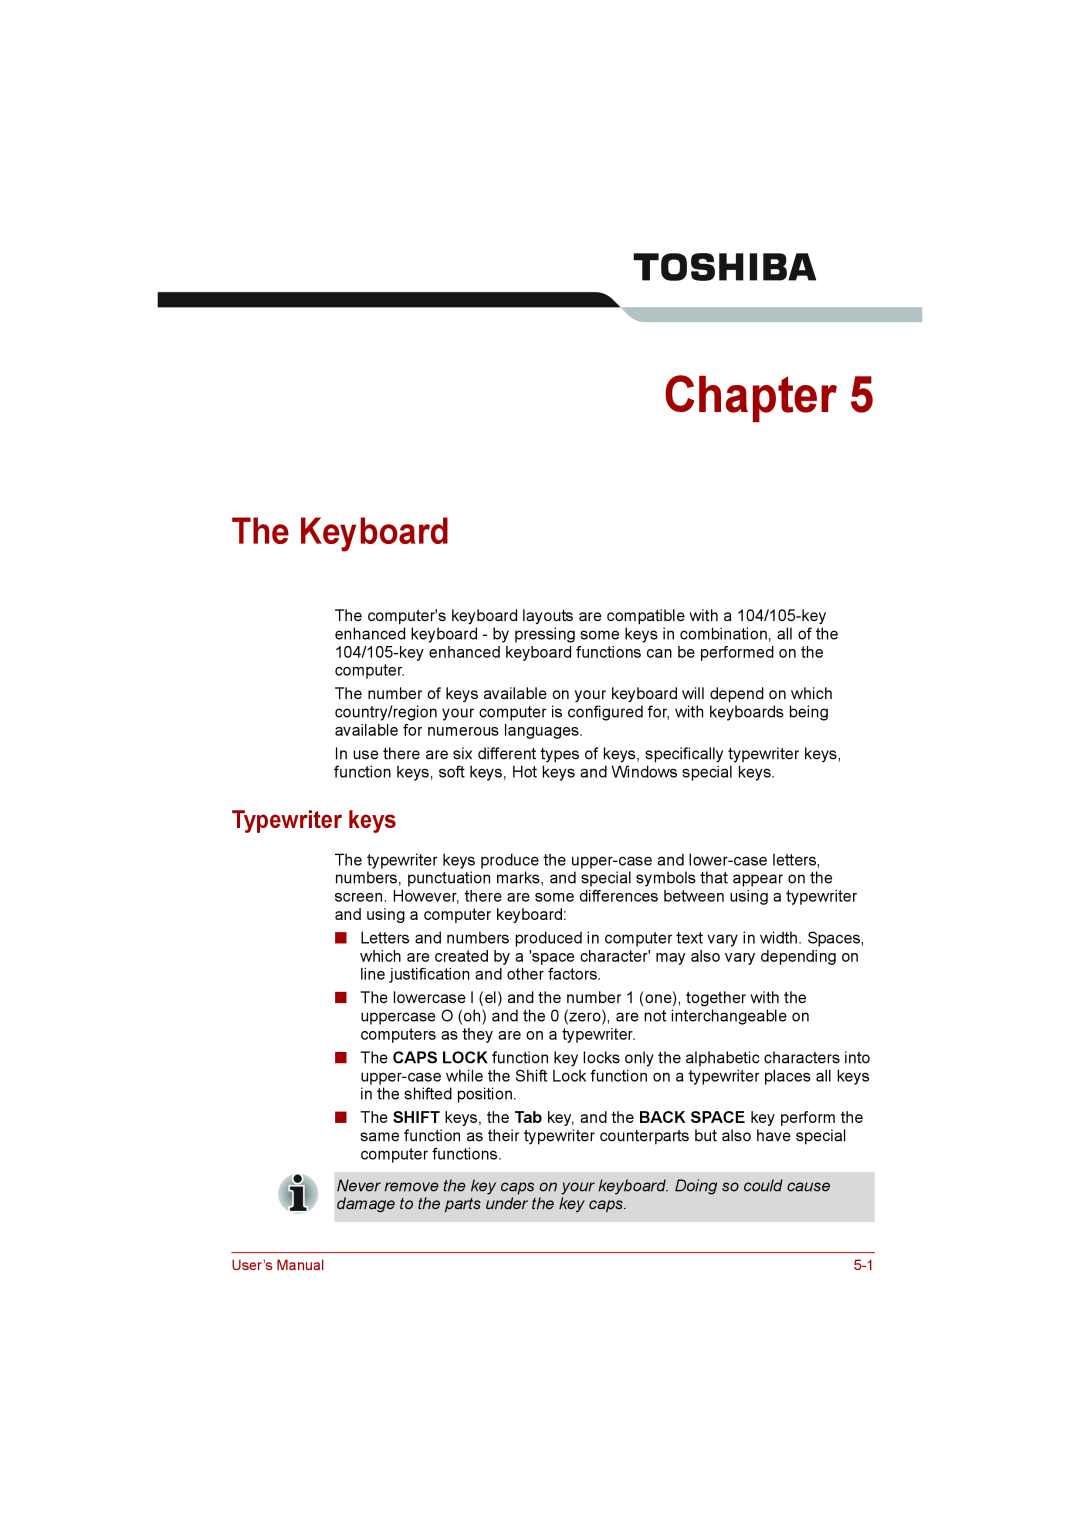 Toshiba toshiba satellite l550/ satellite pro l550/ satellite l550d/ satellite pro l550d series The Keyboard, Chapter 